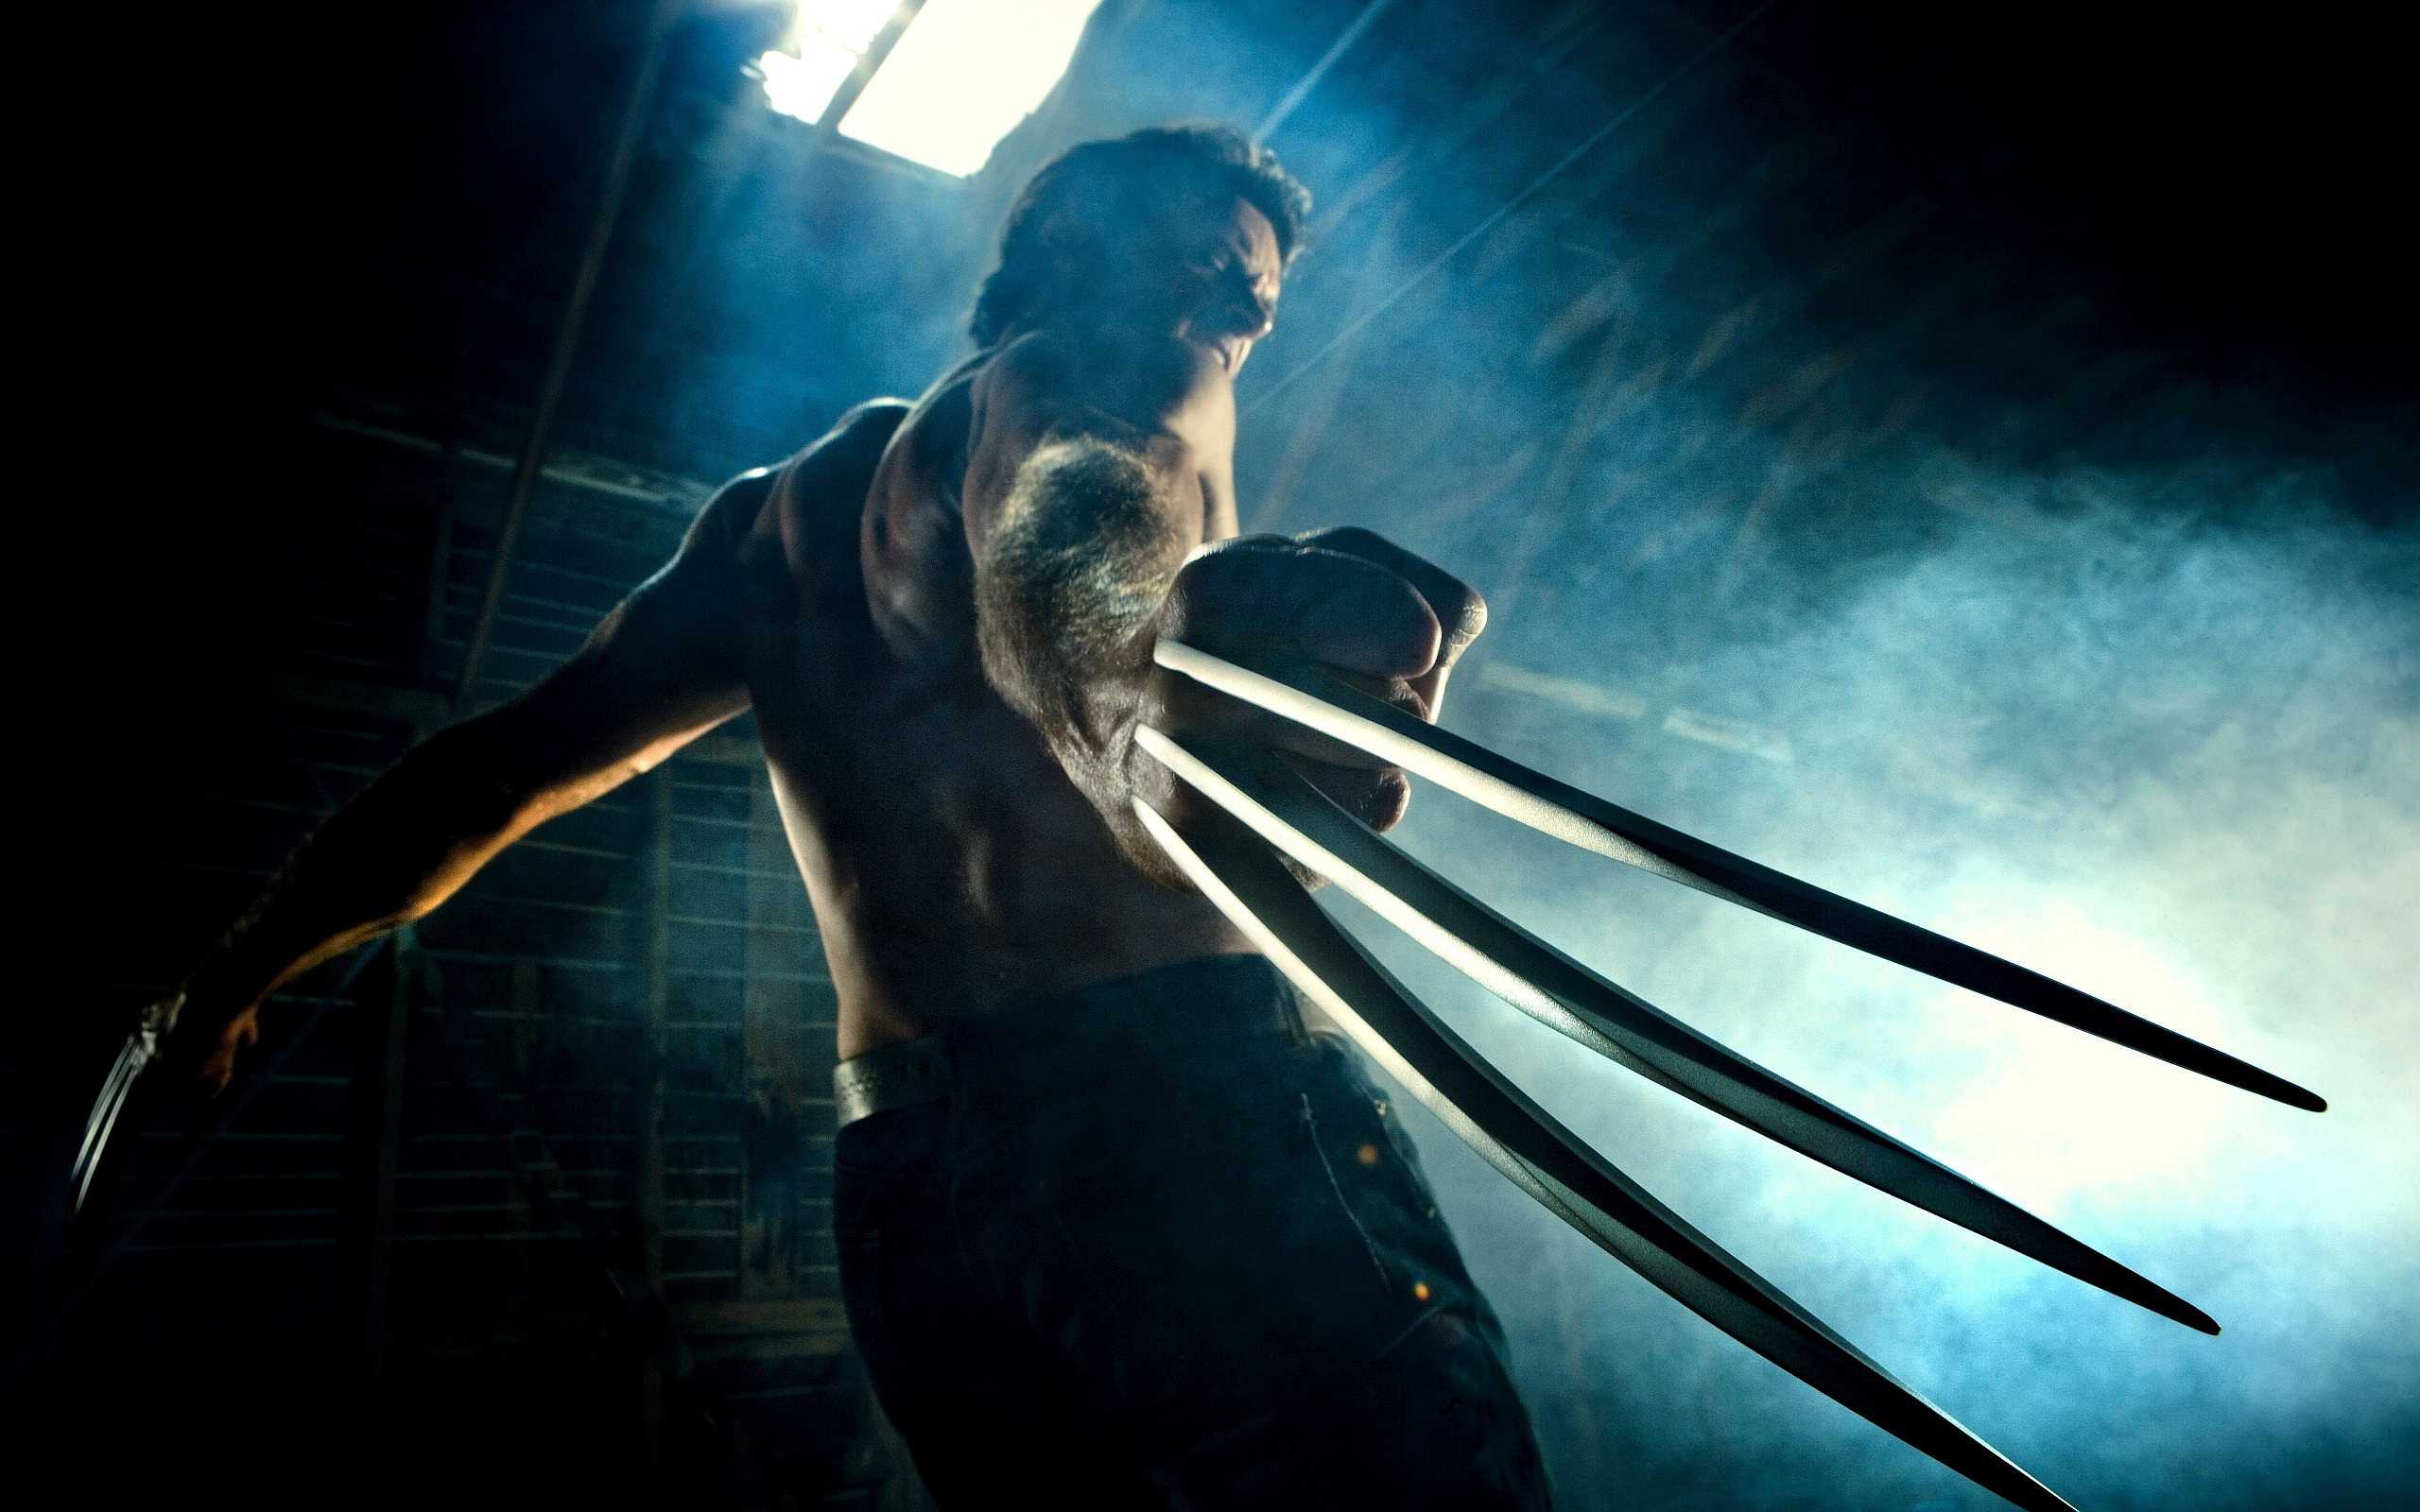 Logan Wolverine Wallpaper HD